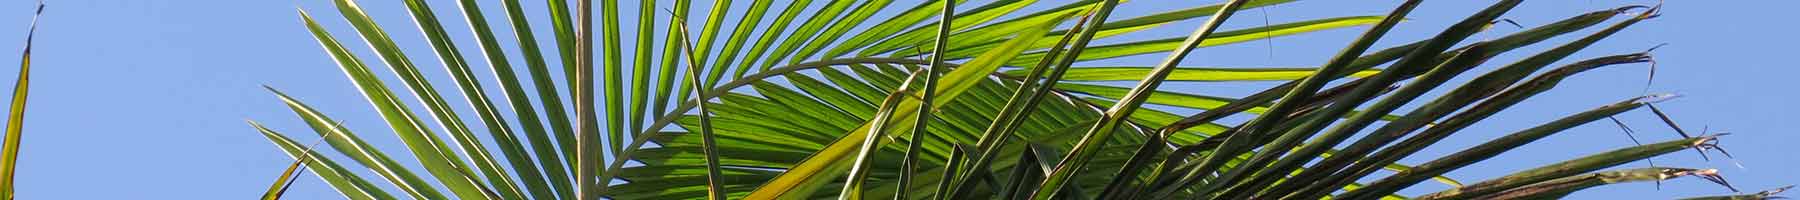 a palm branch against a blue sky